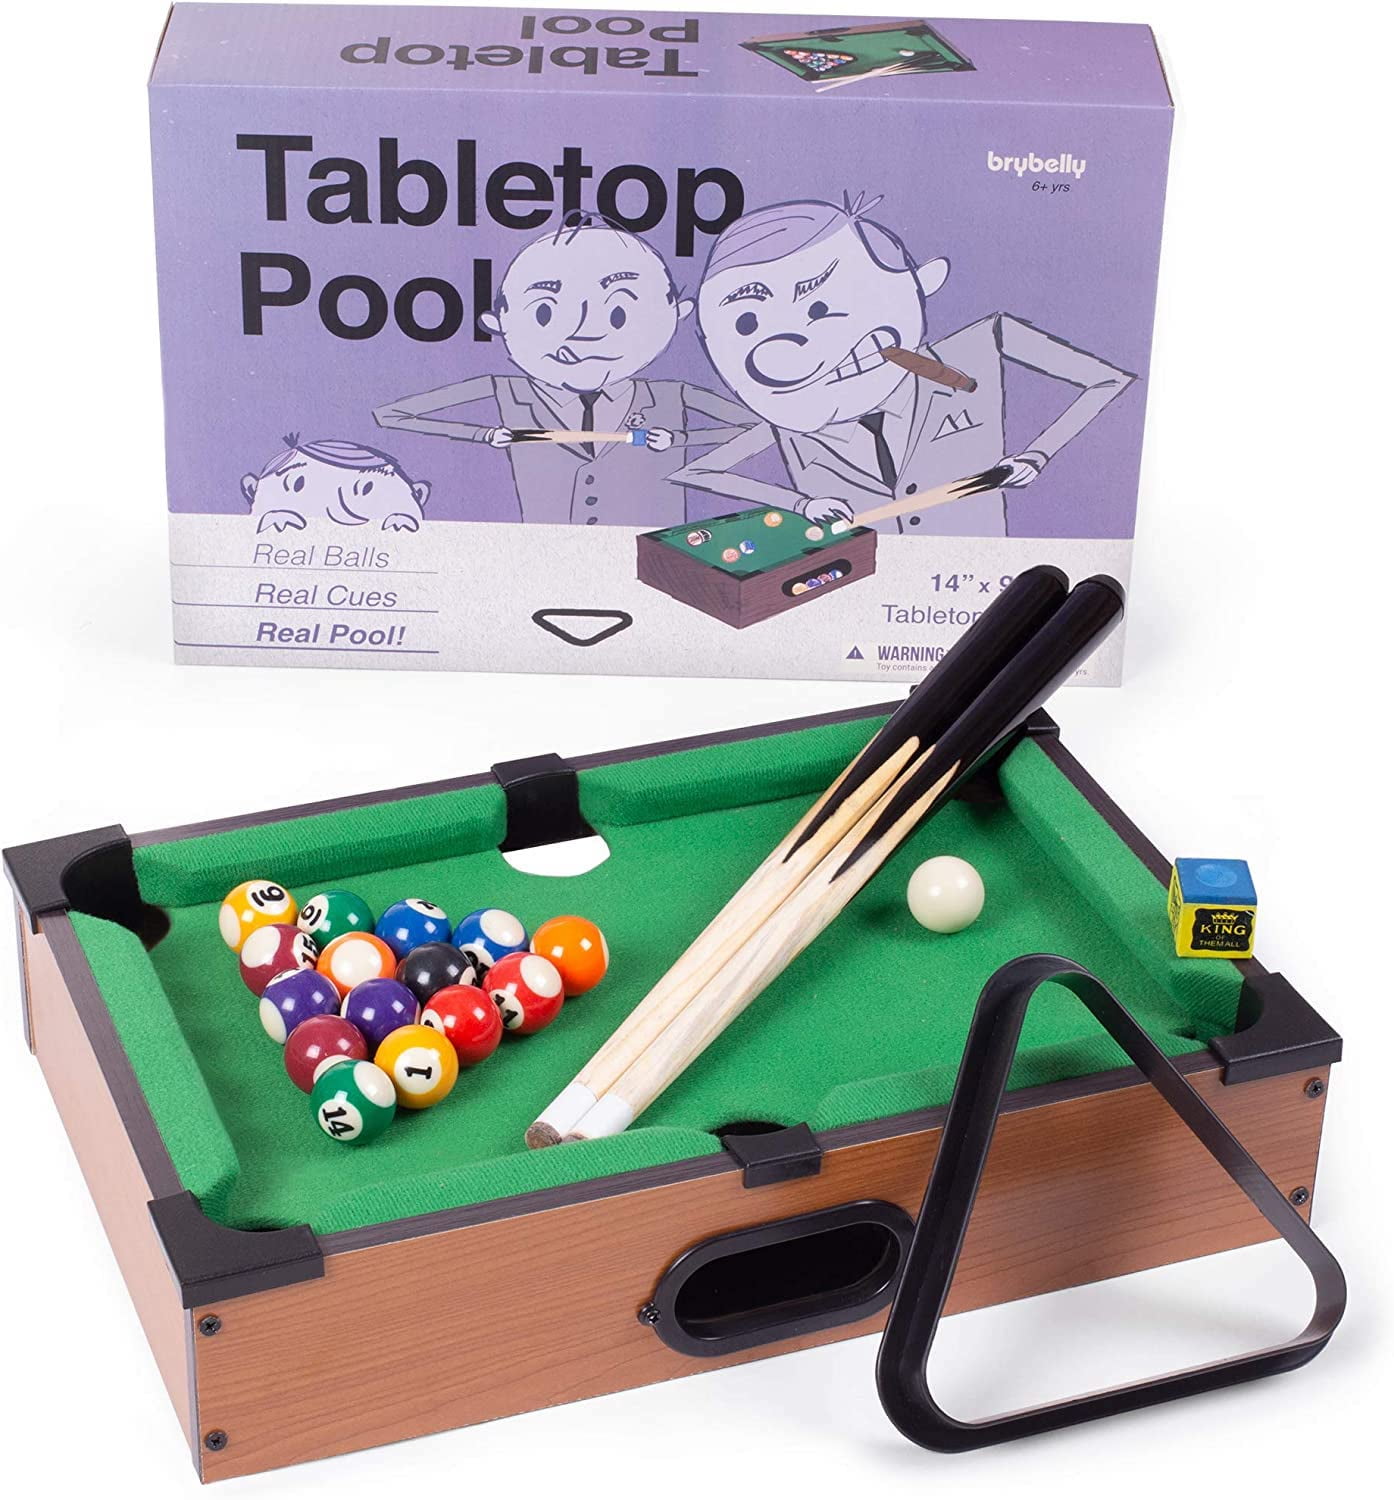 Ggam-1601 Tabletop Pool Game